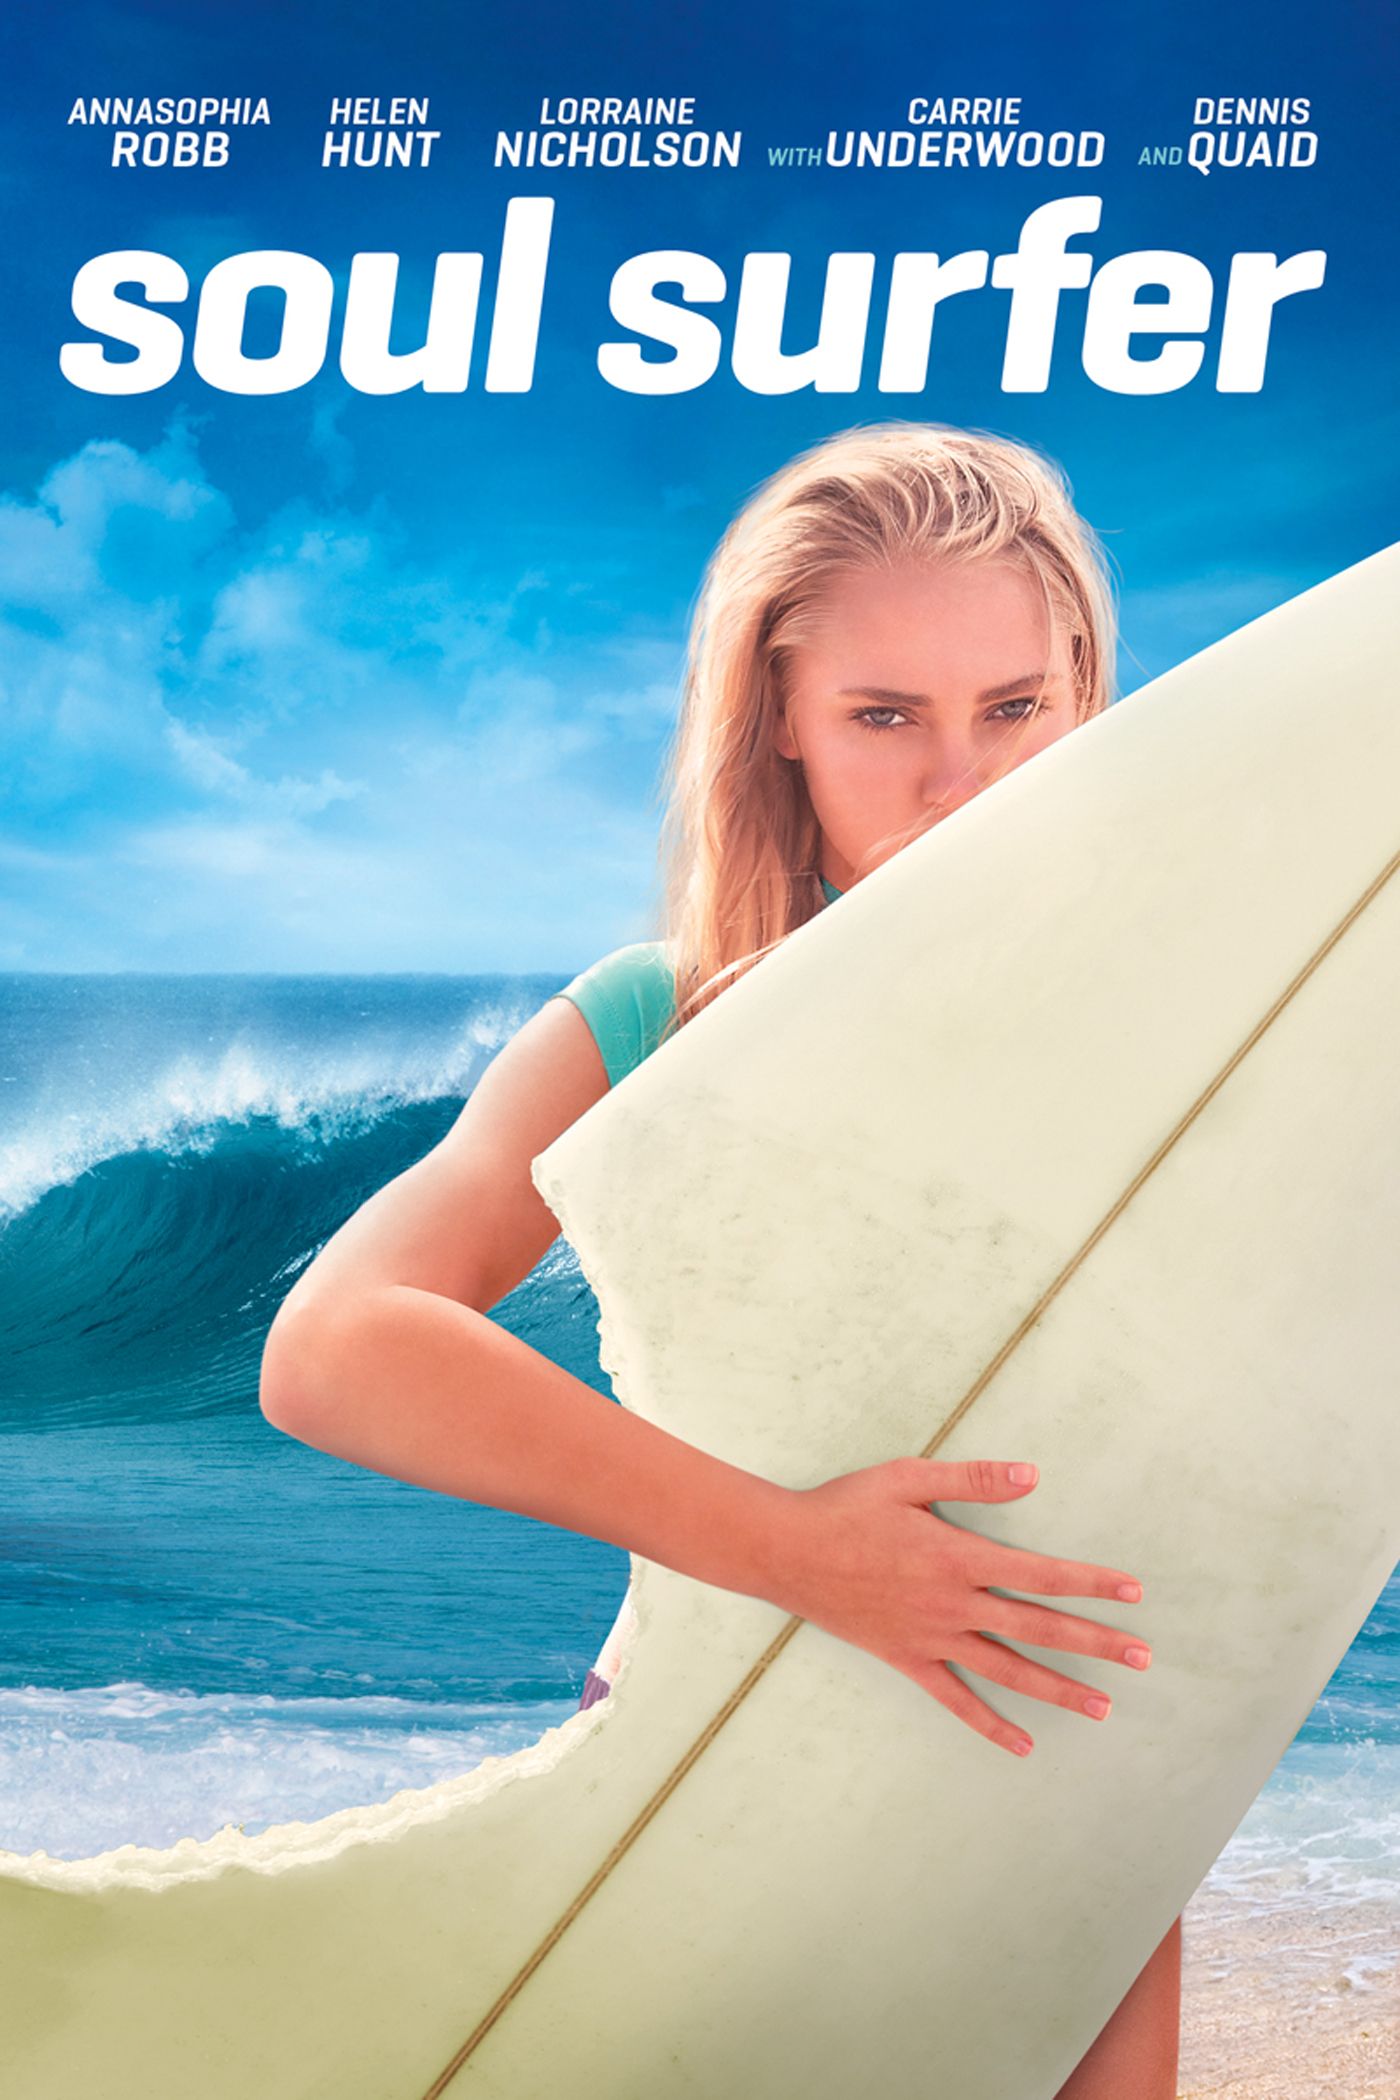 Download Soul Surfer 2011 Full Hd Quality